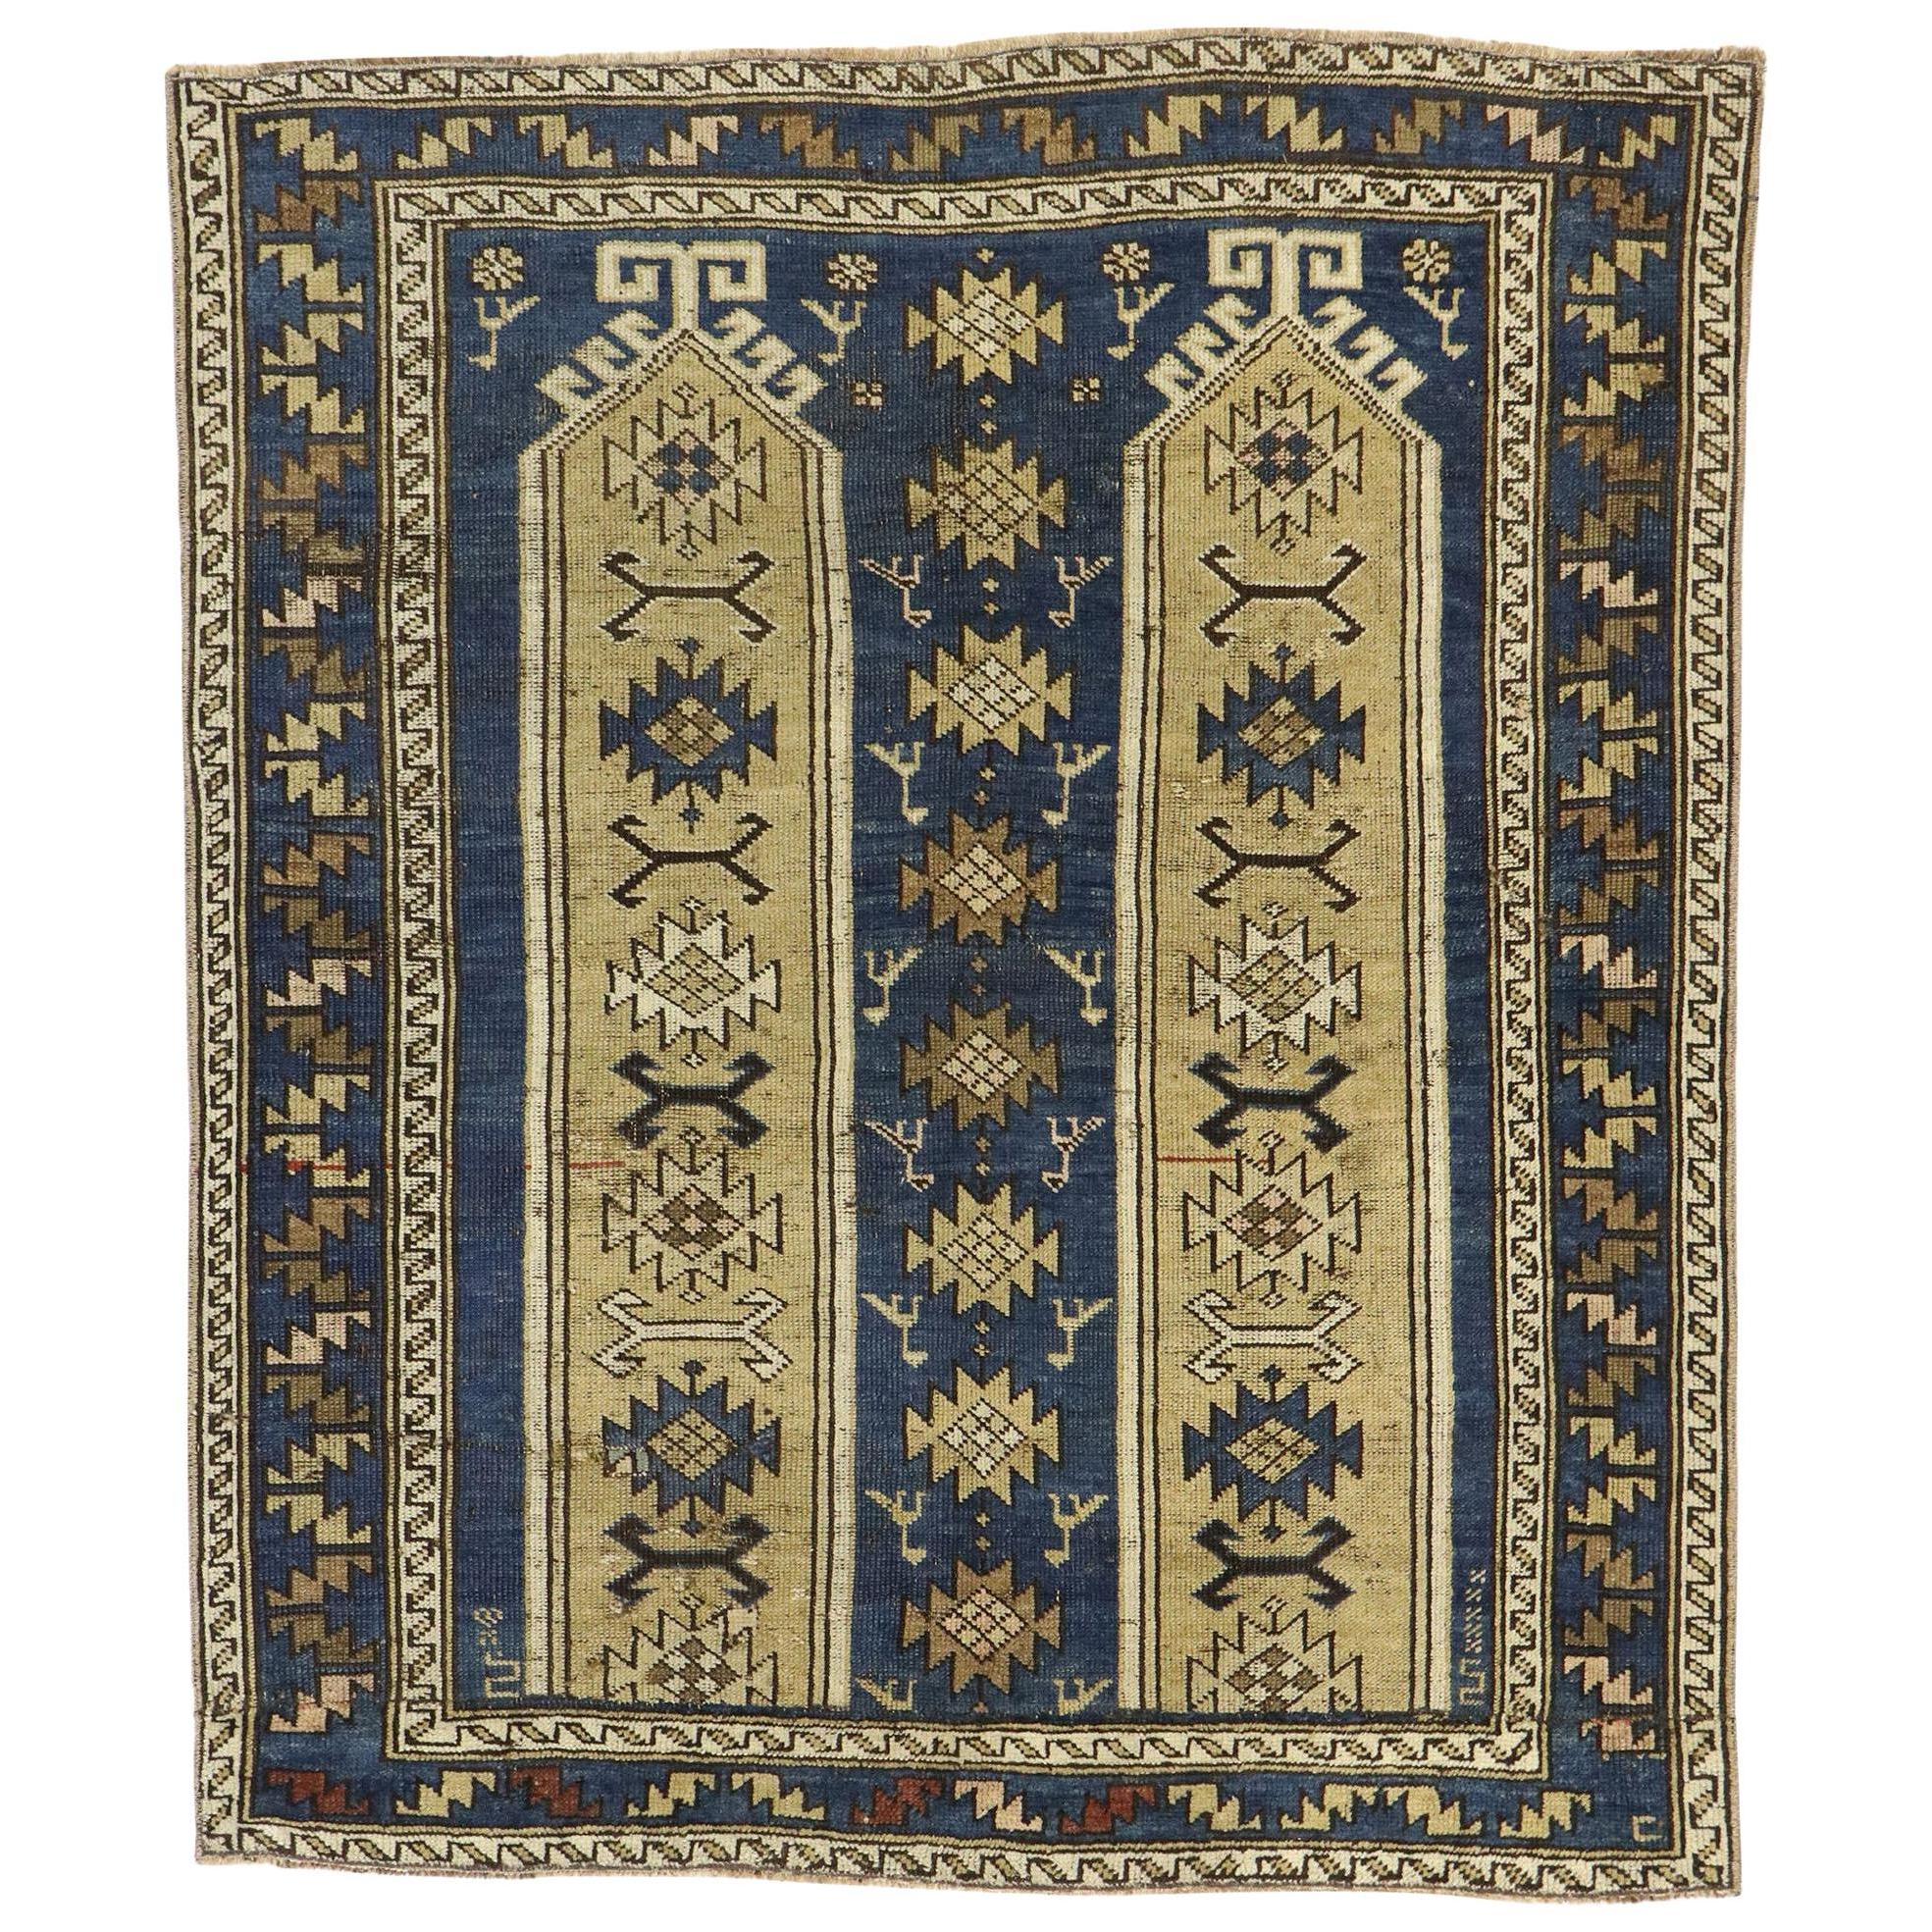 Vintage Caucasian Shirvan Prayer Rug with Mid-Century Modern Tribal Style